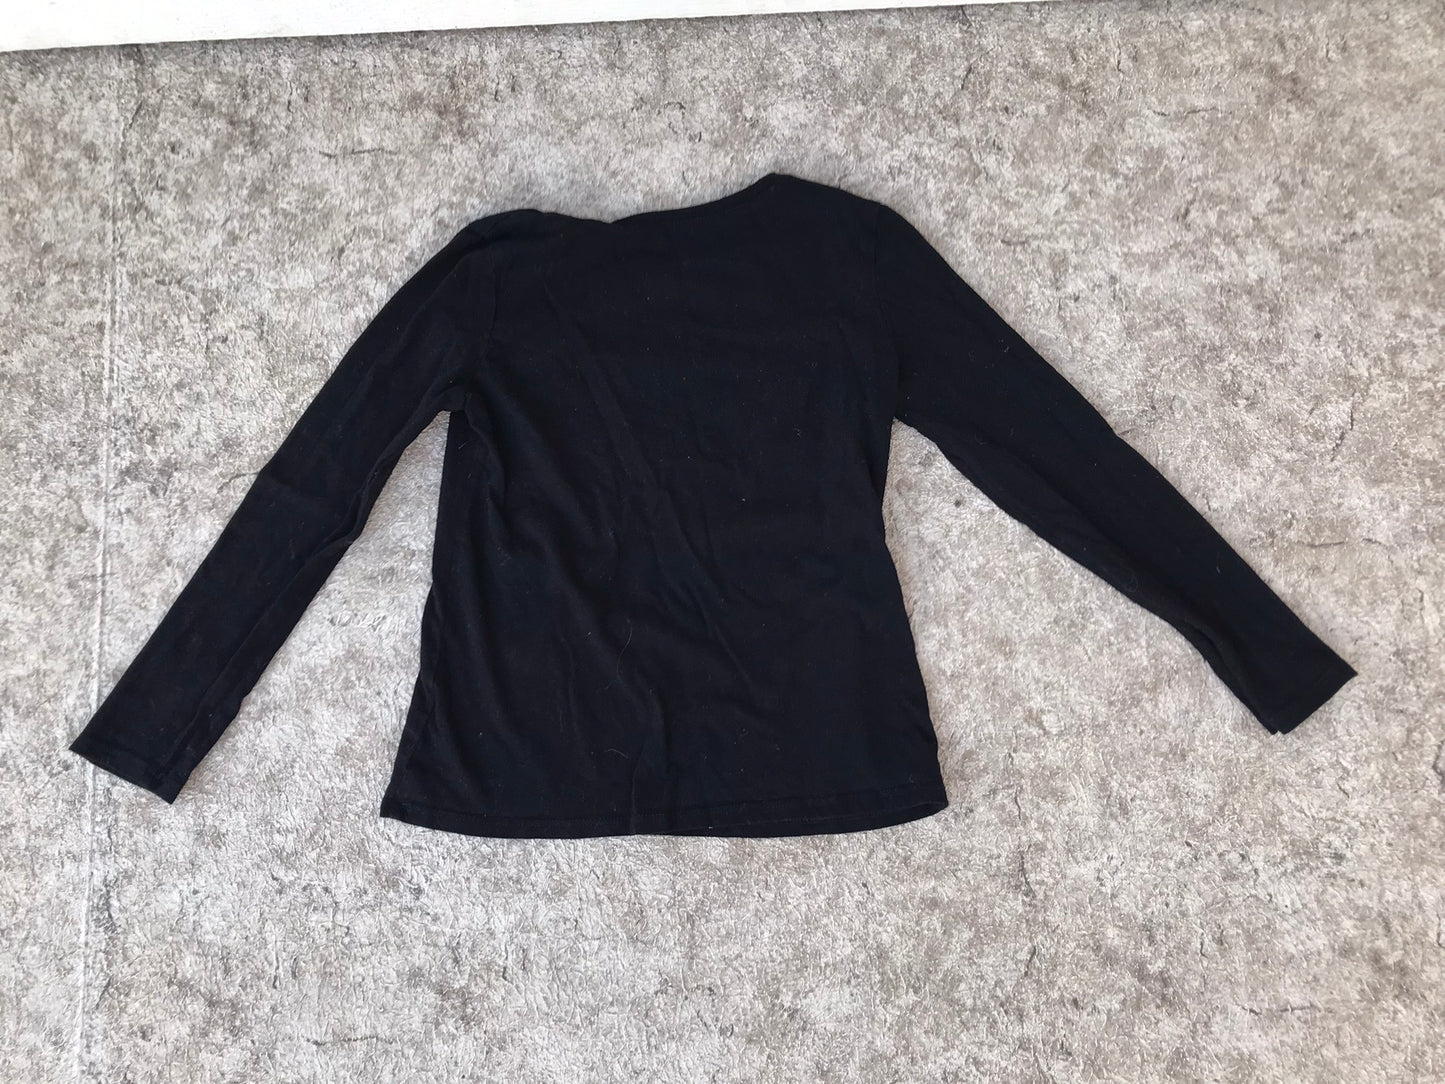 Halloween Child Size 7-8 Long Sleeve Fun Shirt Cotton Black